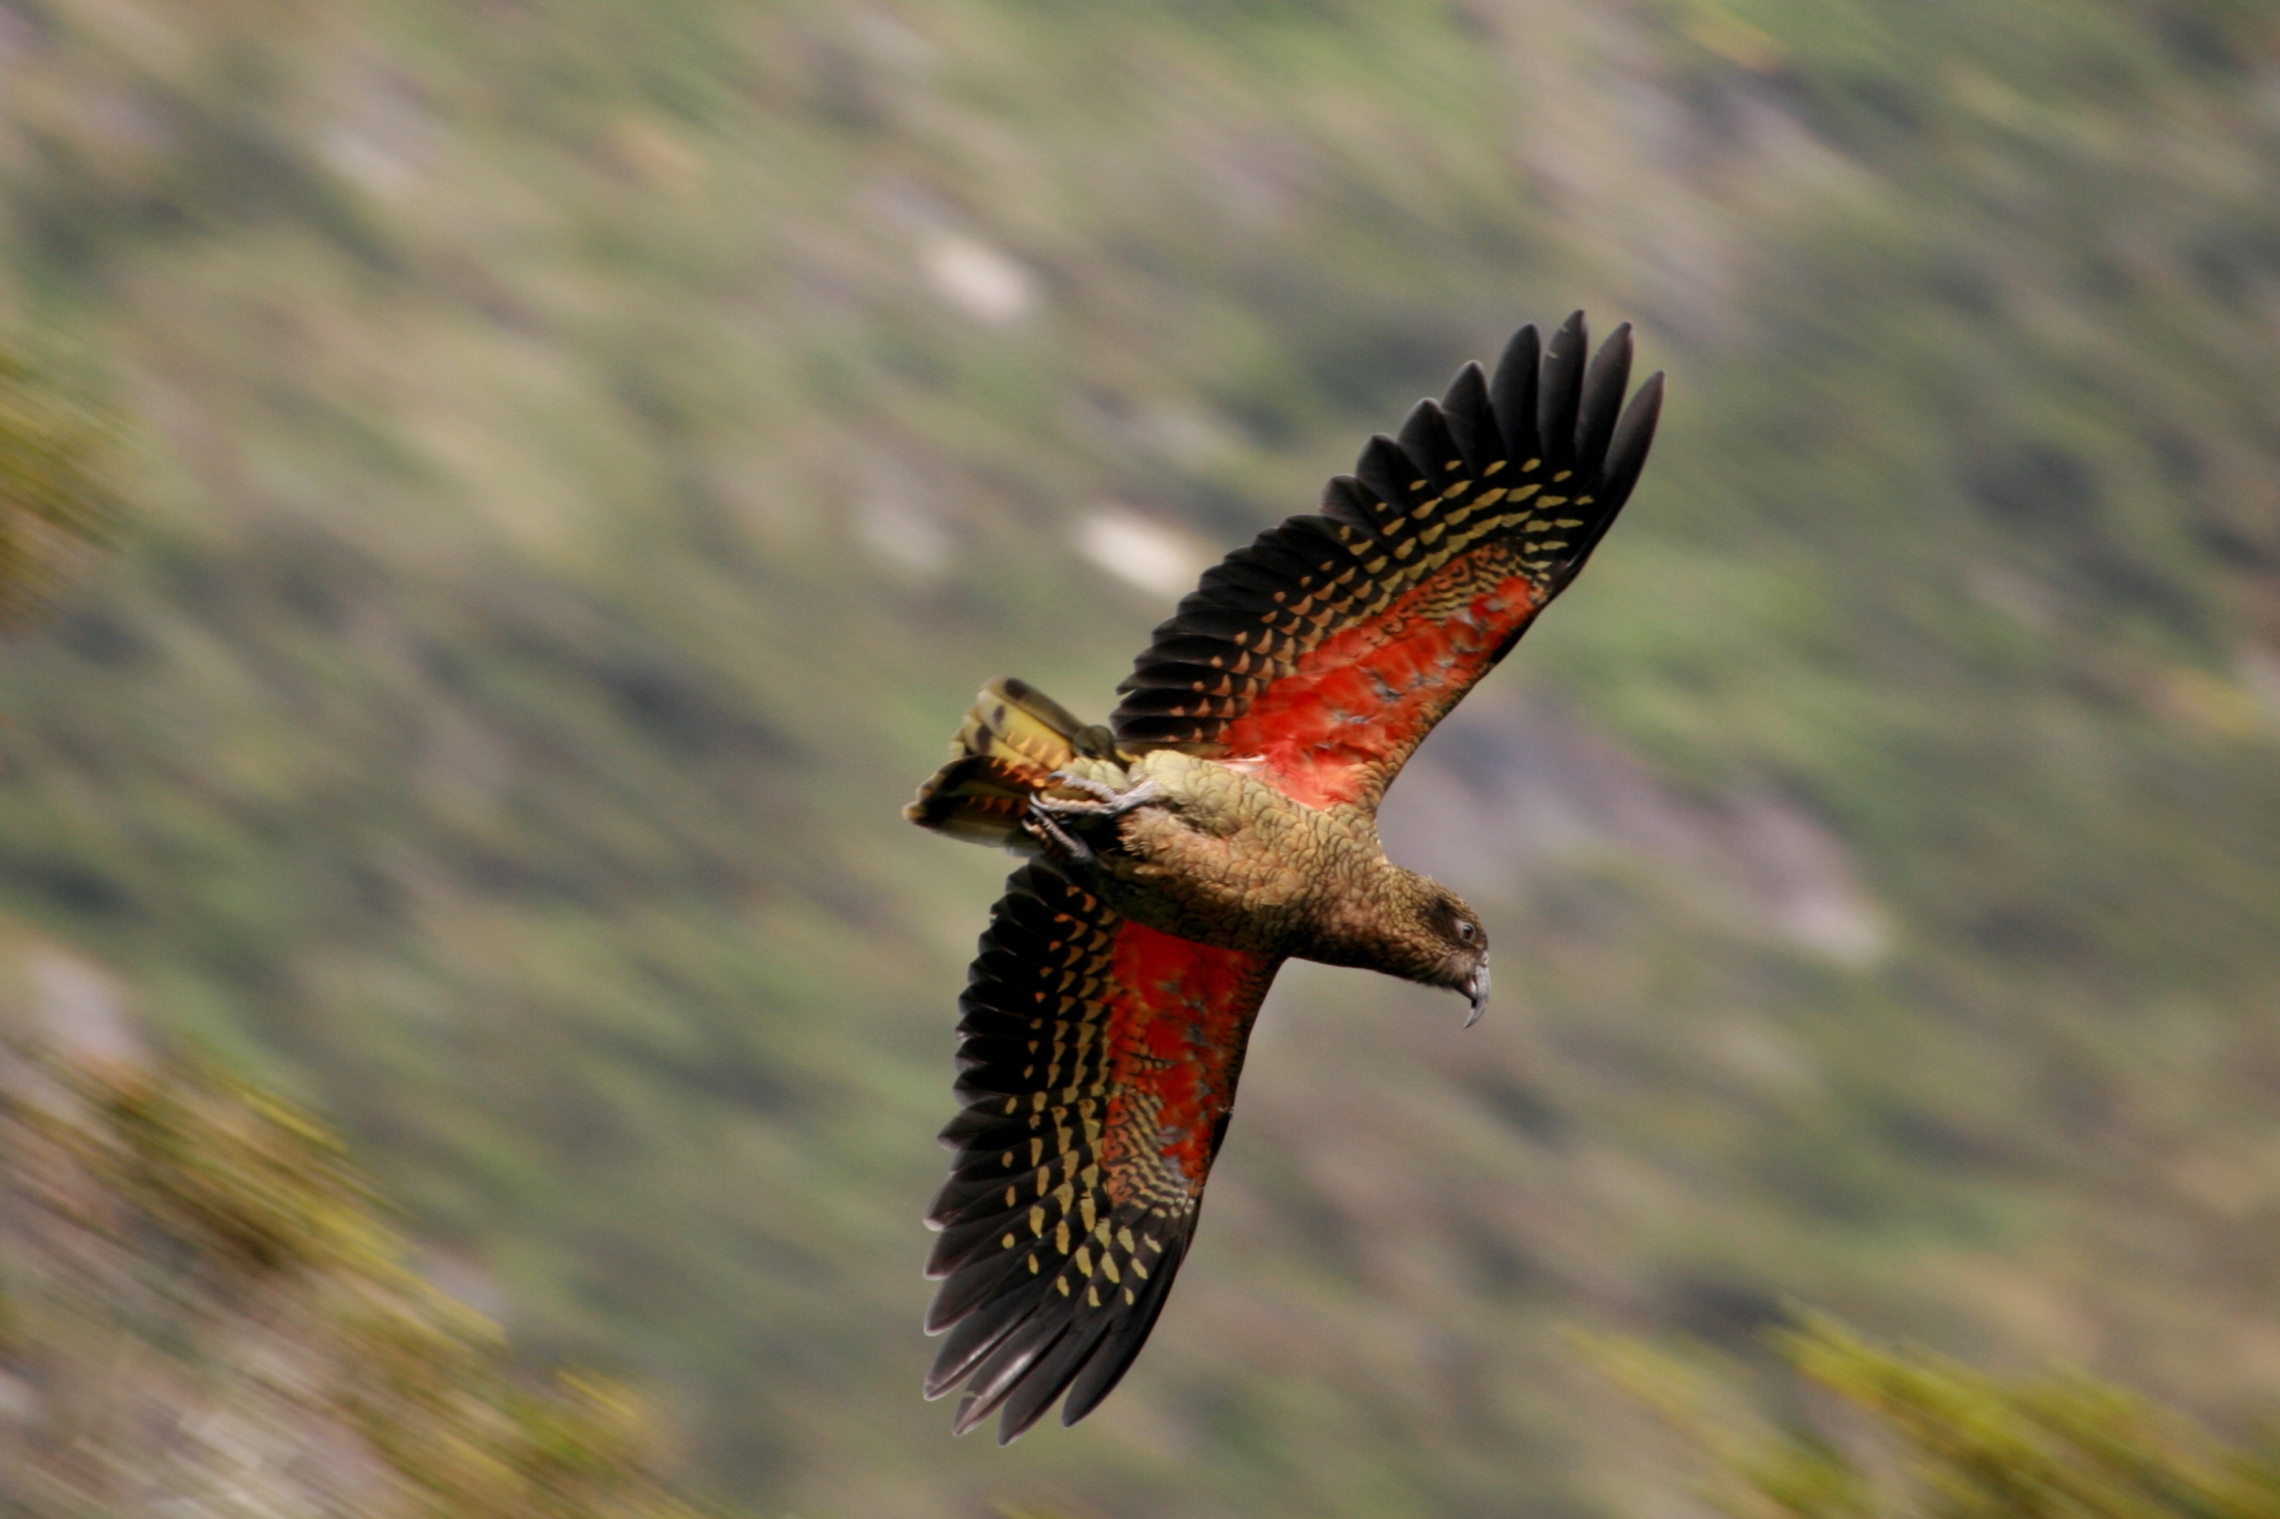 Flight of the kea